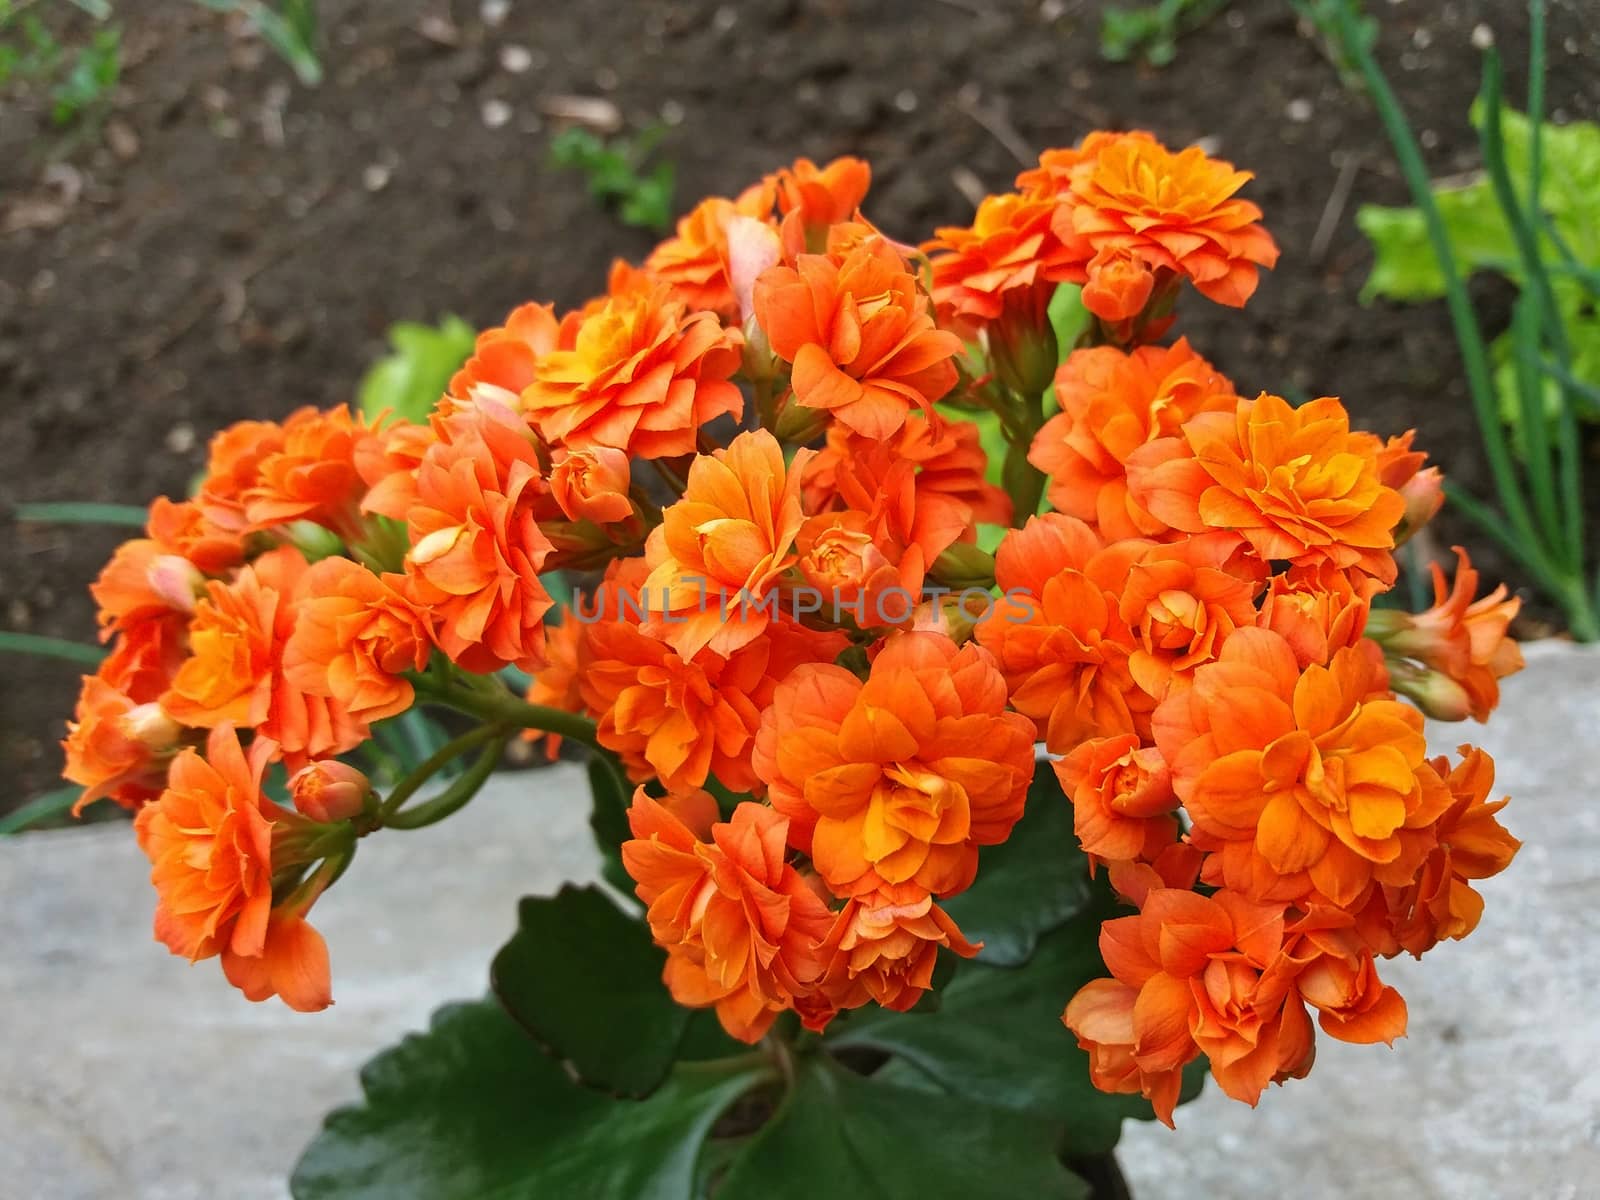 Kalanchoe Blossfeldiana with many orange flowers beautiful by Mindru